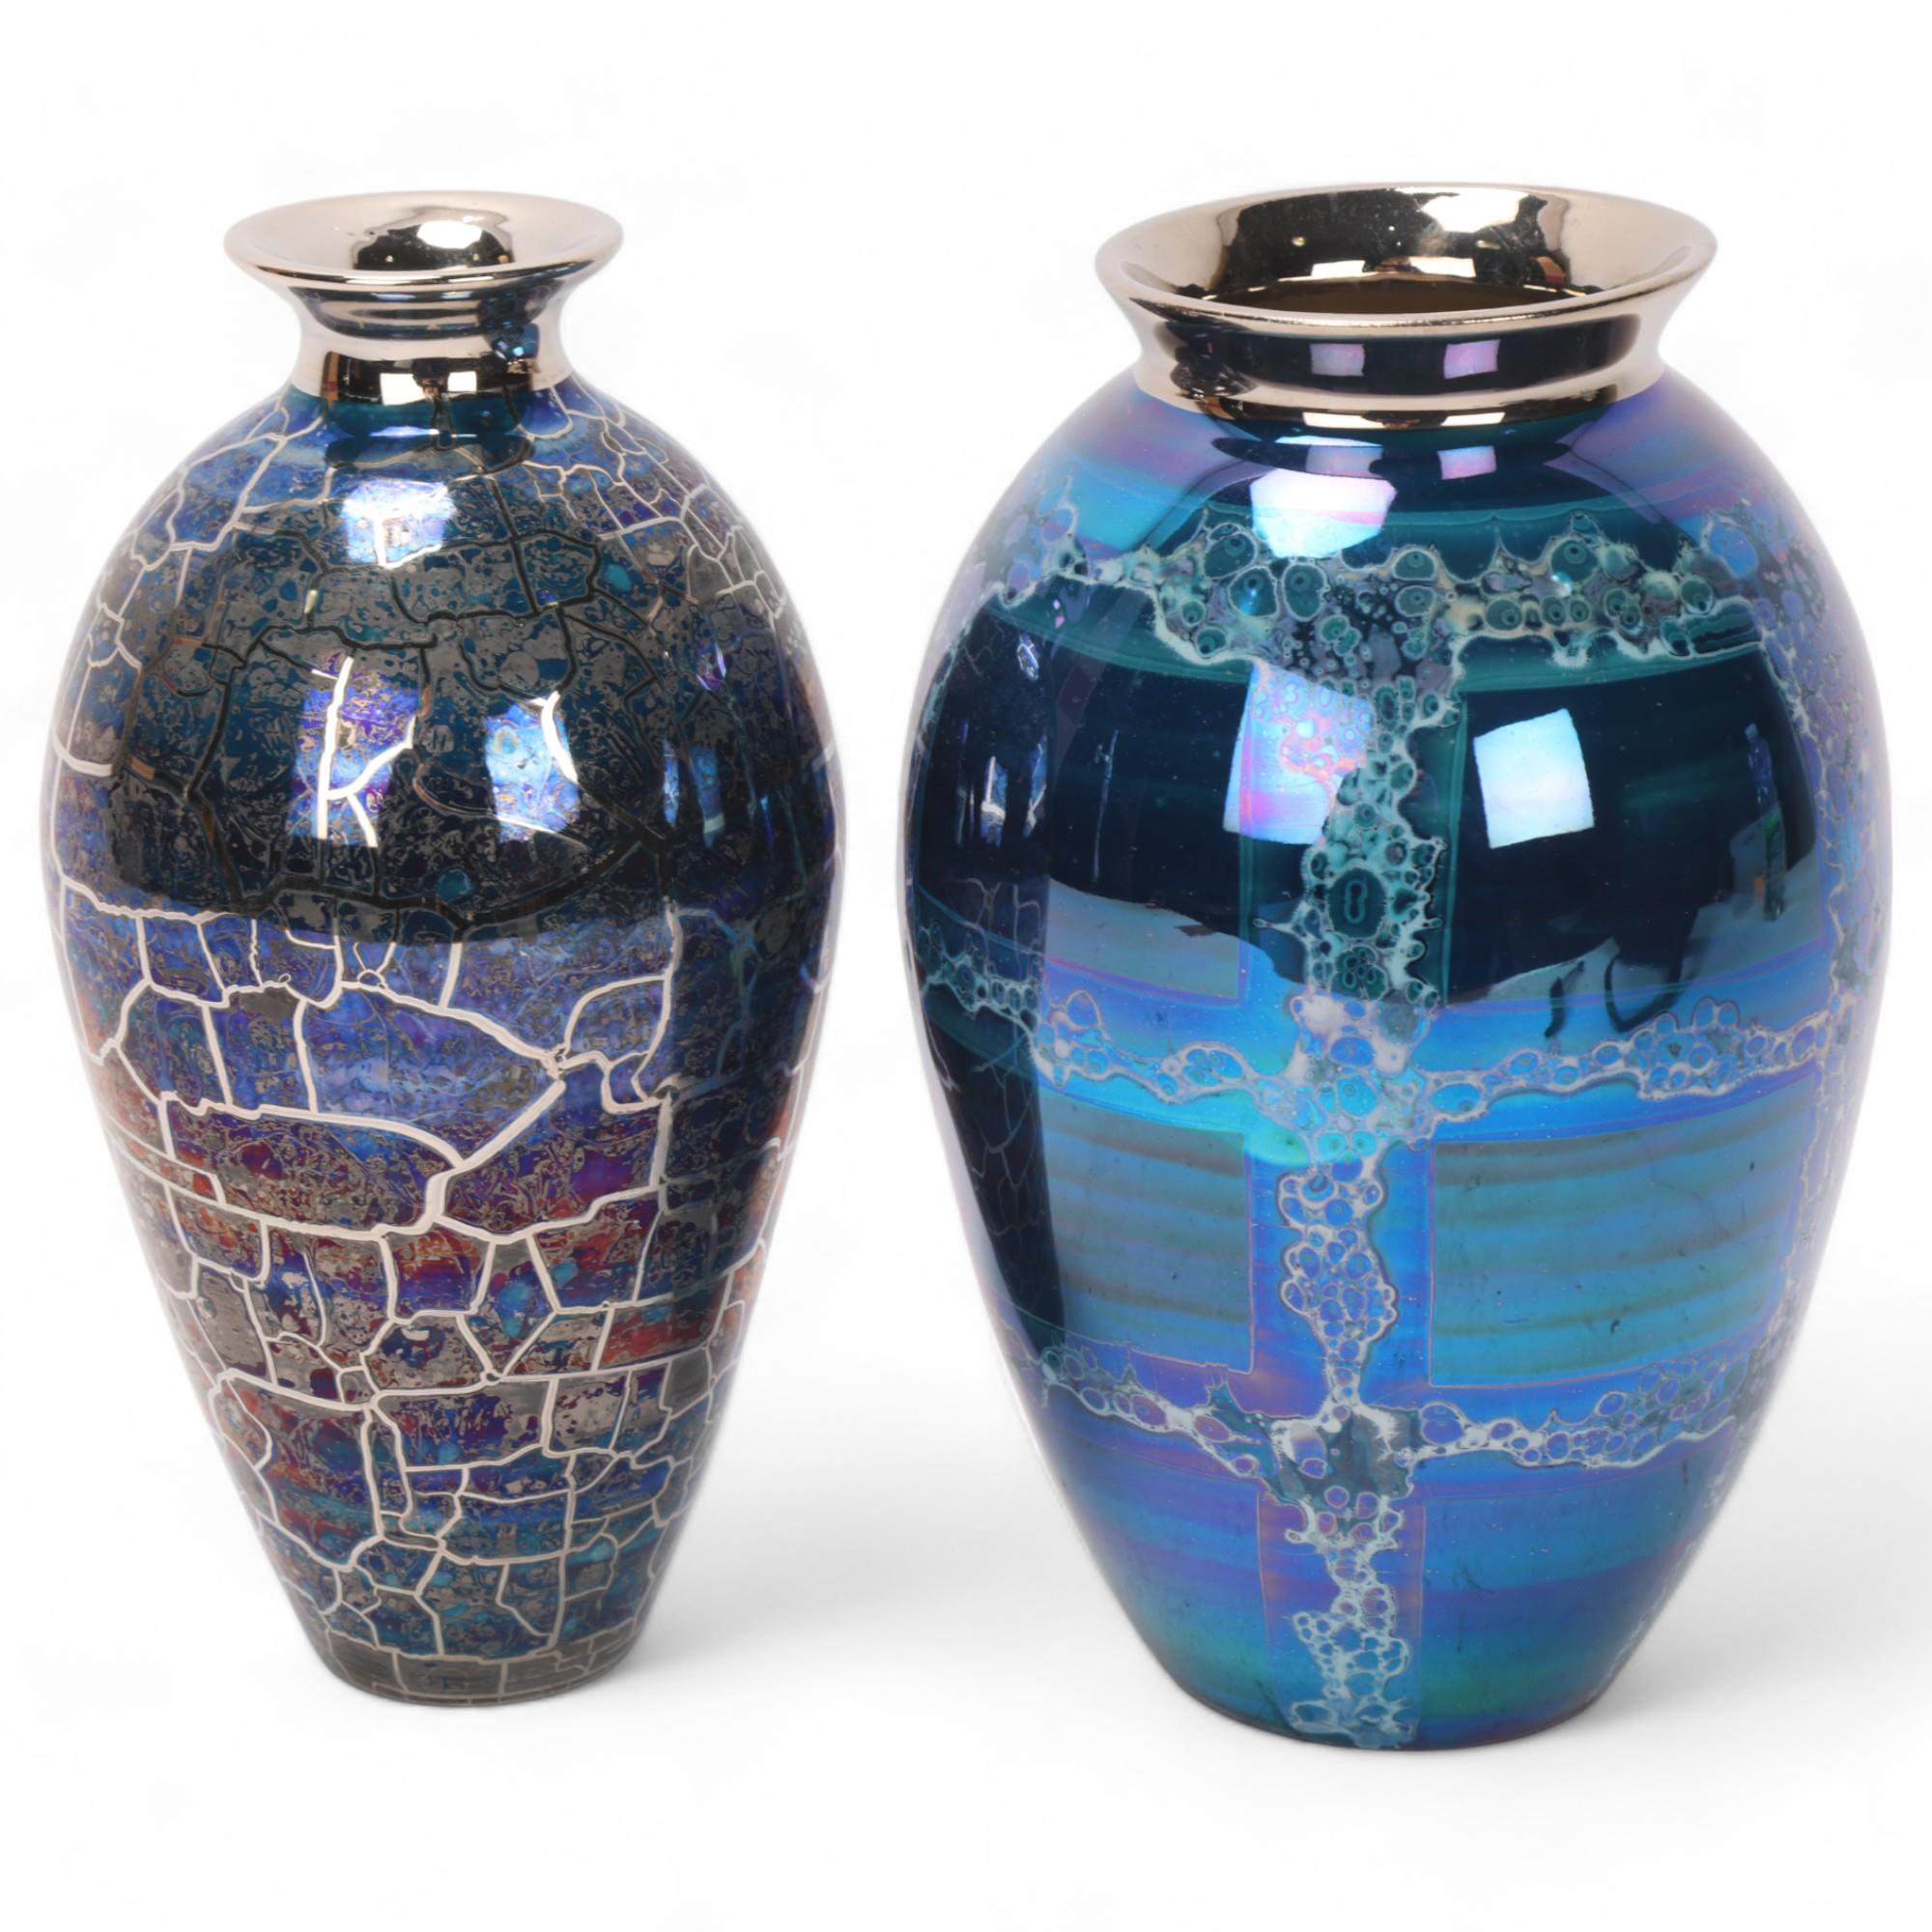 CAROLINE & STEPHEN ATKINSON-JONES, a pair of slip-cast trumpet vases, with silver lustre glaze,